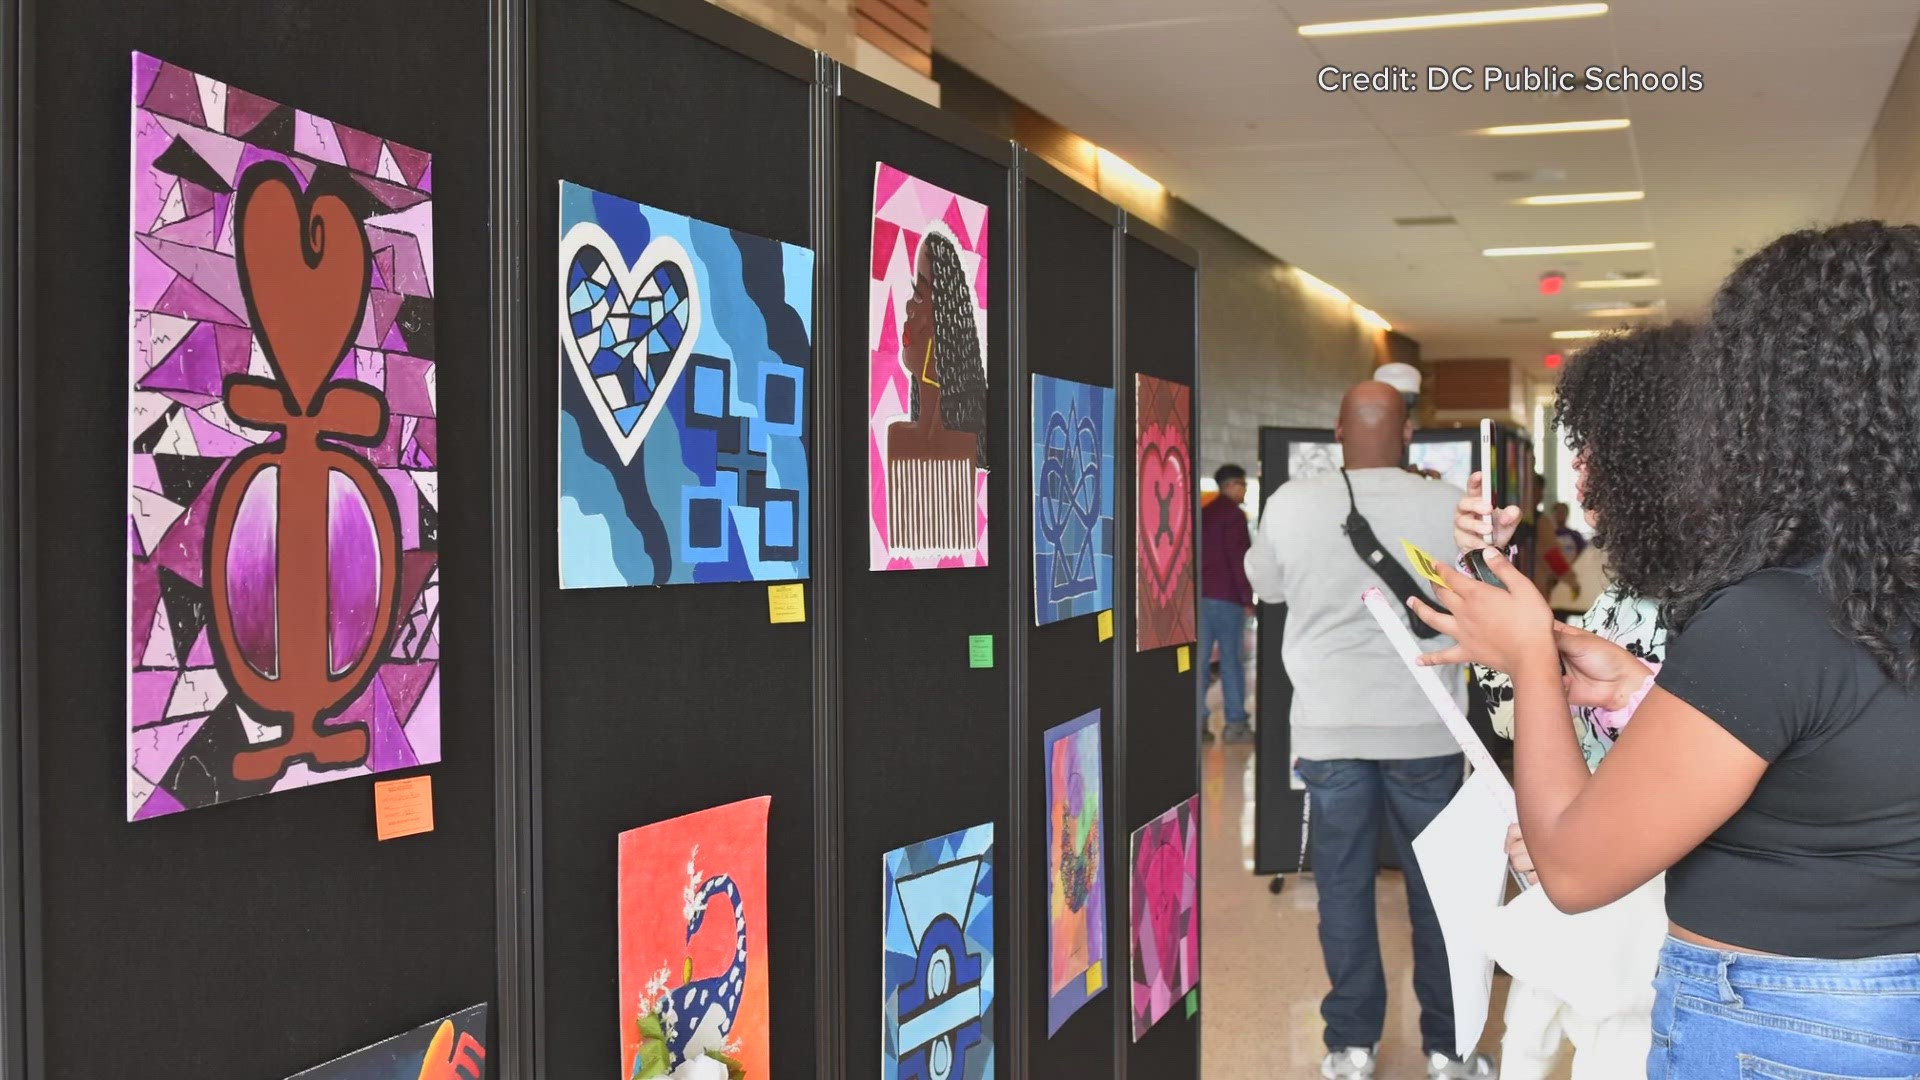 Kuumba Hall at Dunbar High School honored the Kwanzaa principle of creativity by showcasing student artwork